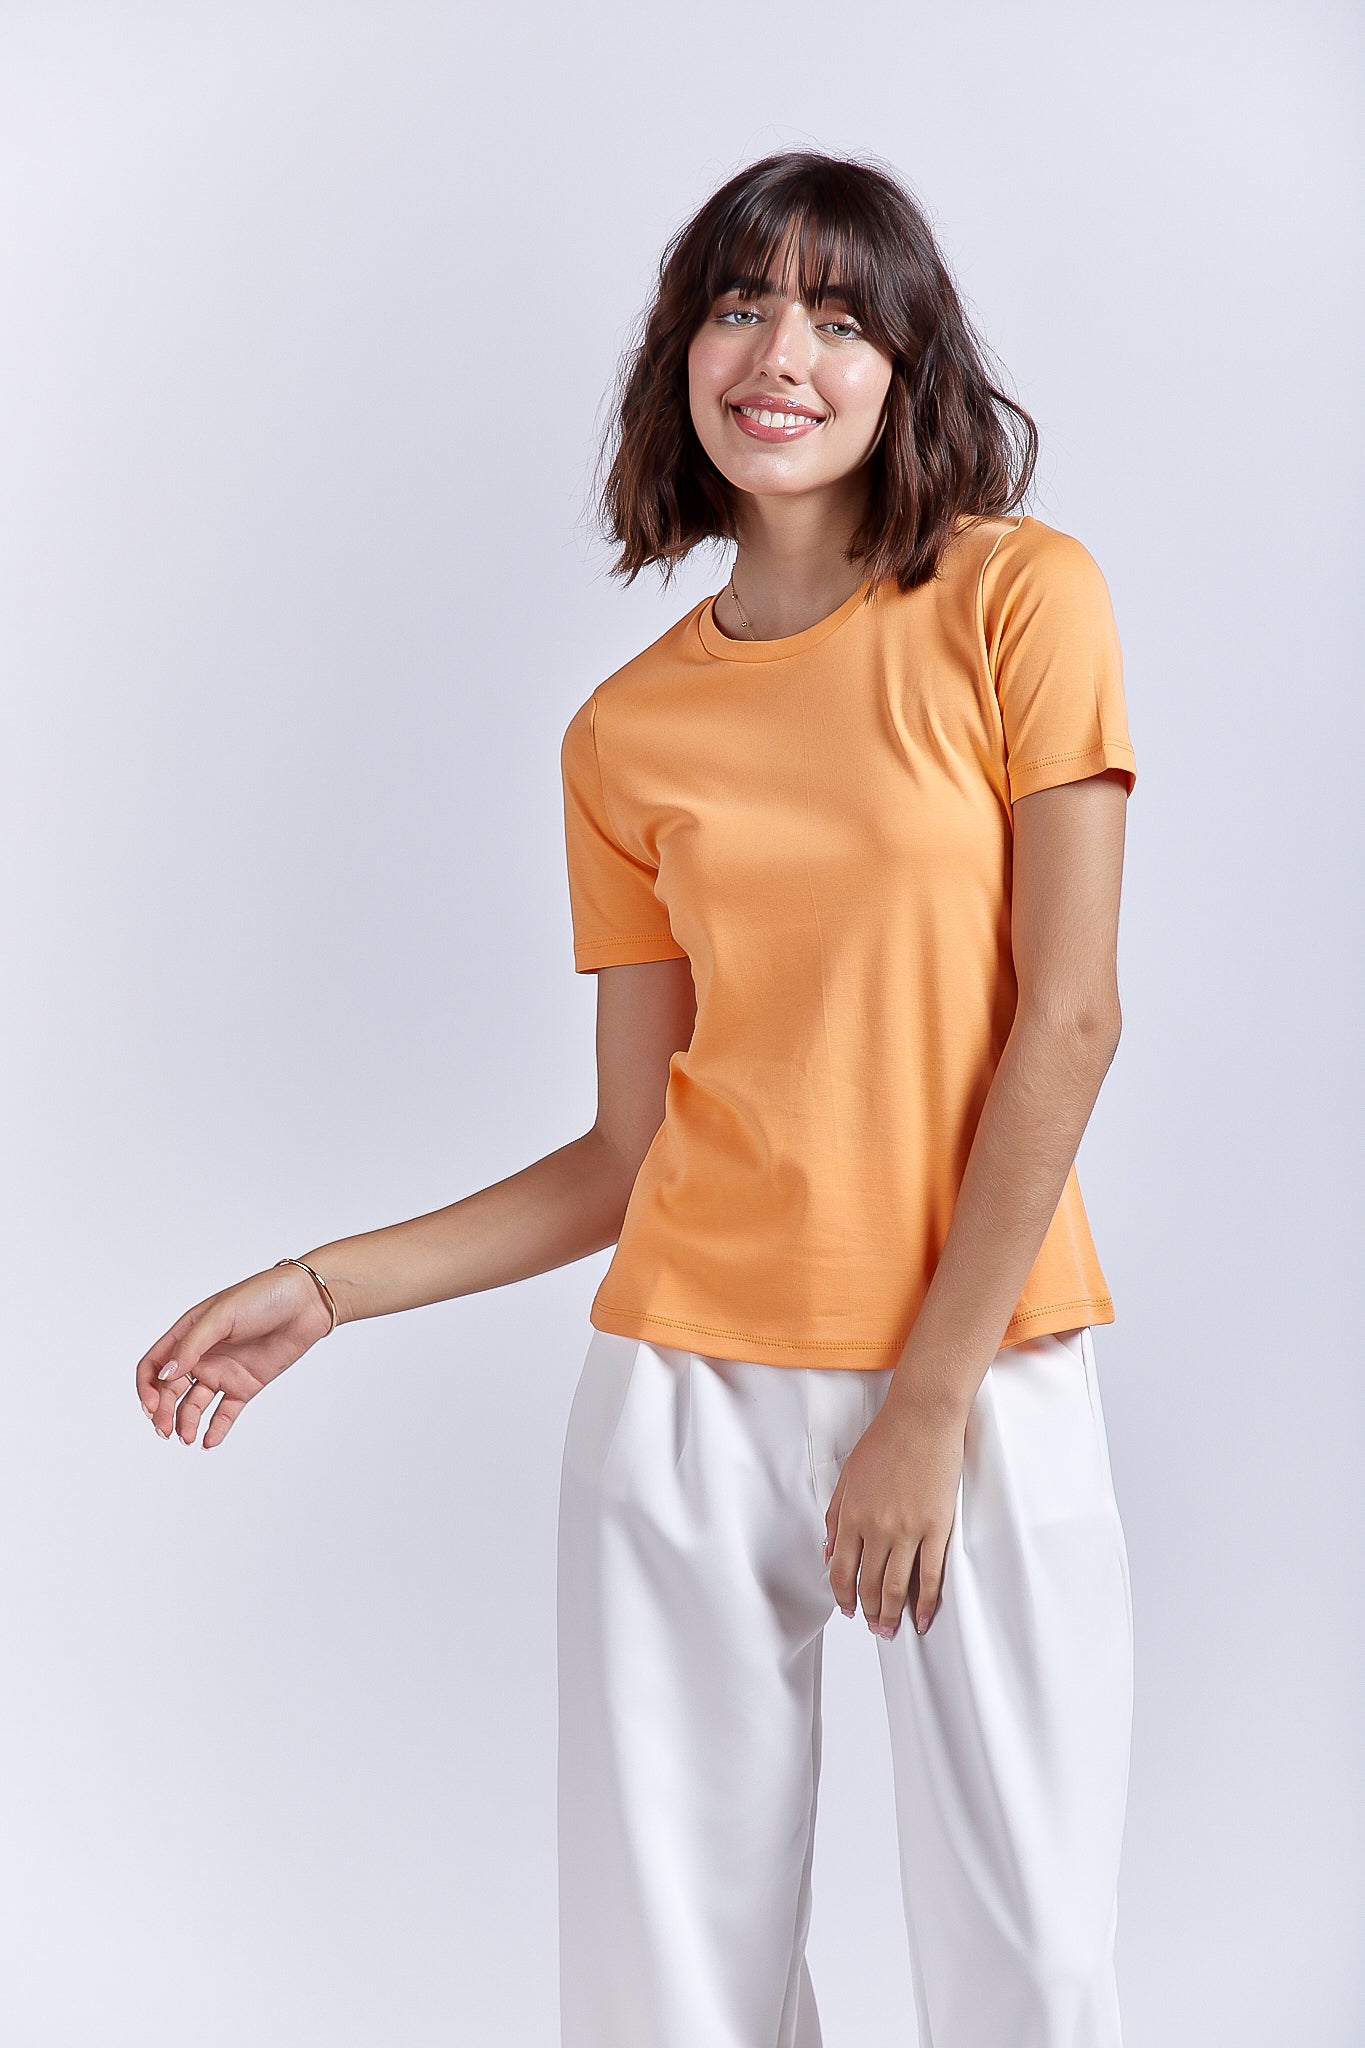 Camiseta orange - Pima bebe